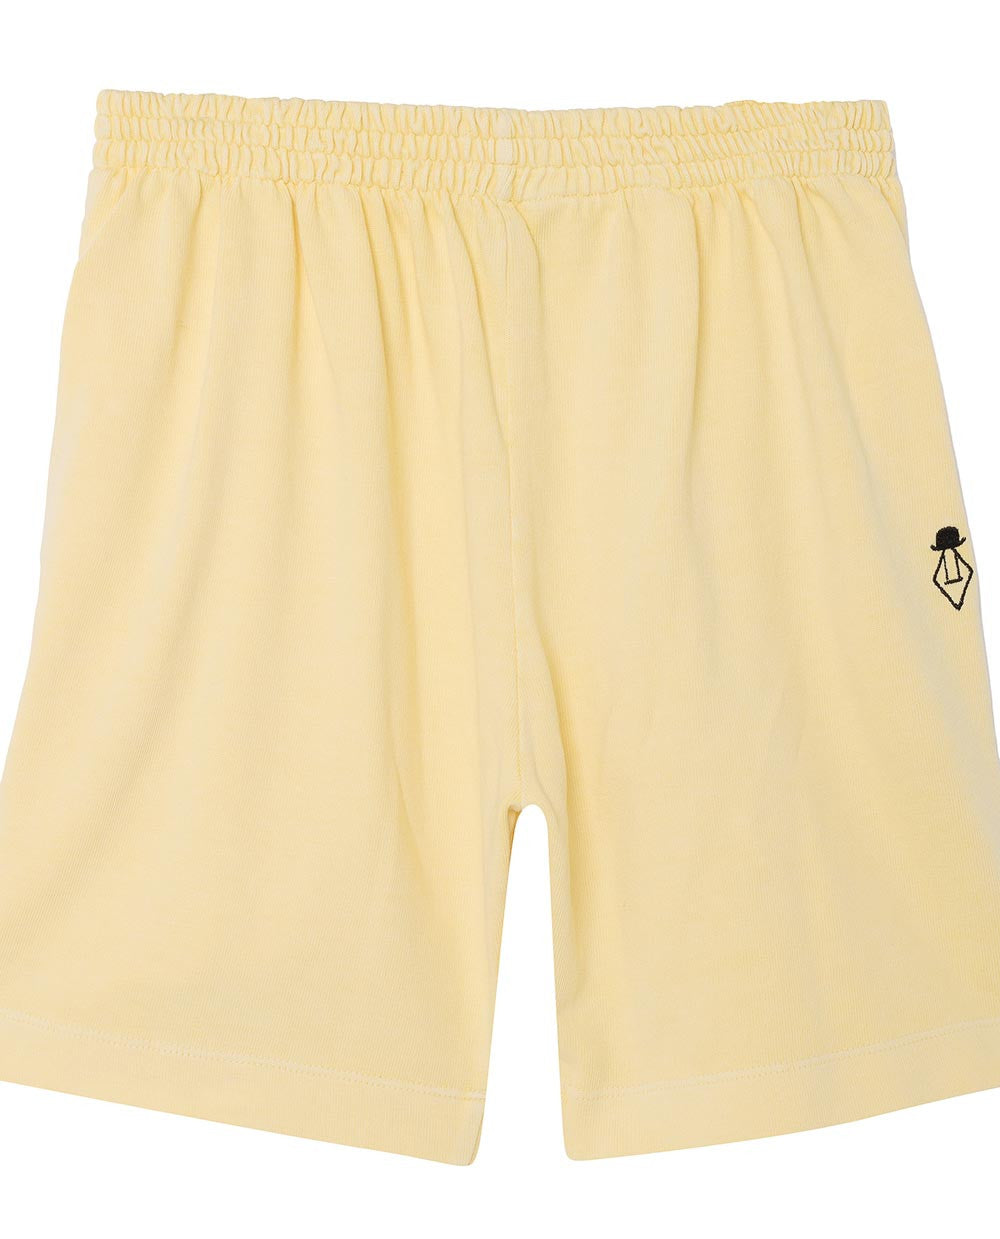 Boys Yellow Cotton Shorts With Black Logo - CÉMAROSE | Children's Fashion Store - 3